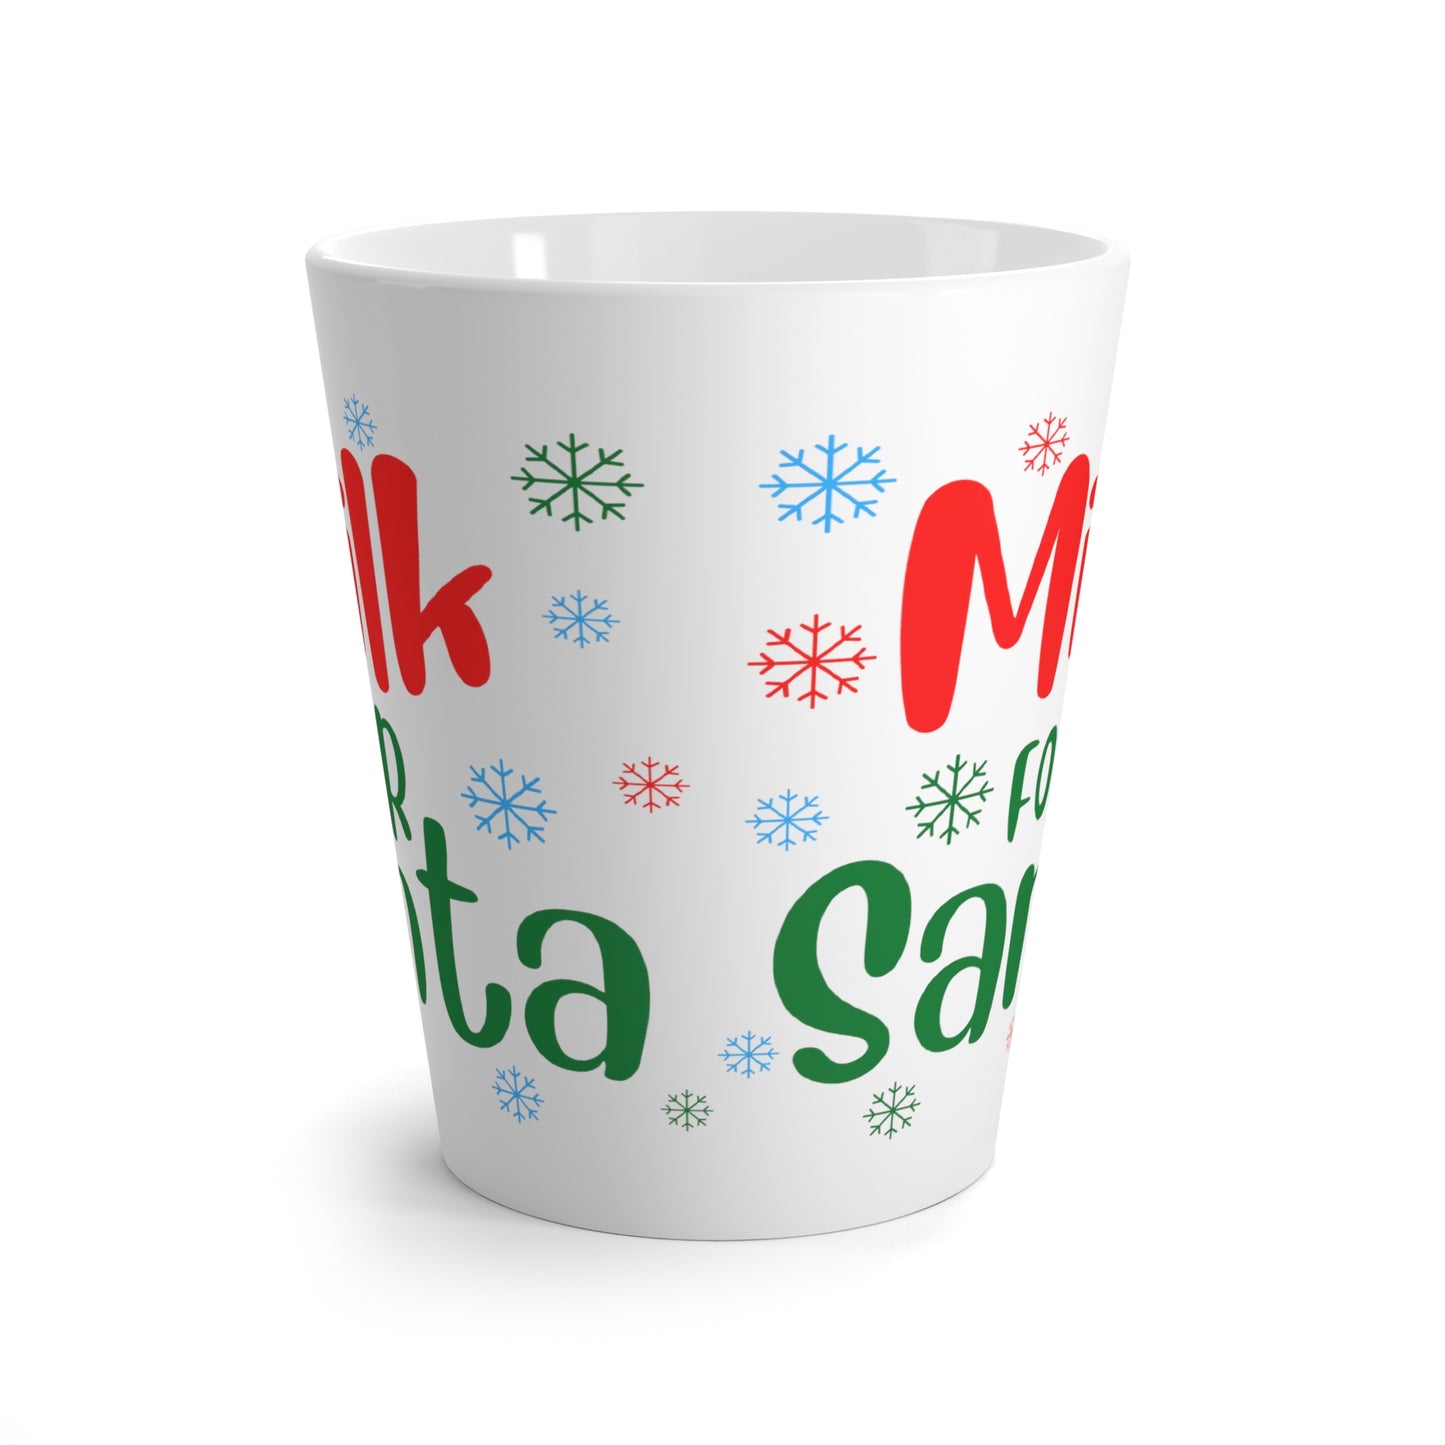 Milk for Santa Printed Latte Coffee Mug, 12oz